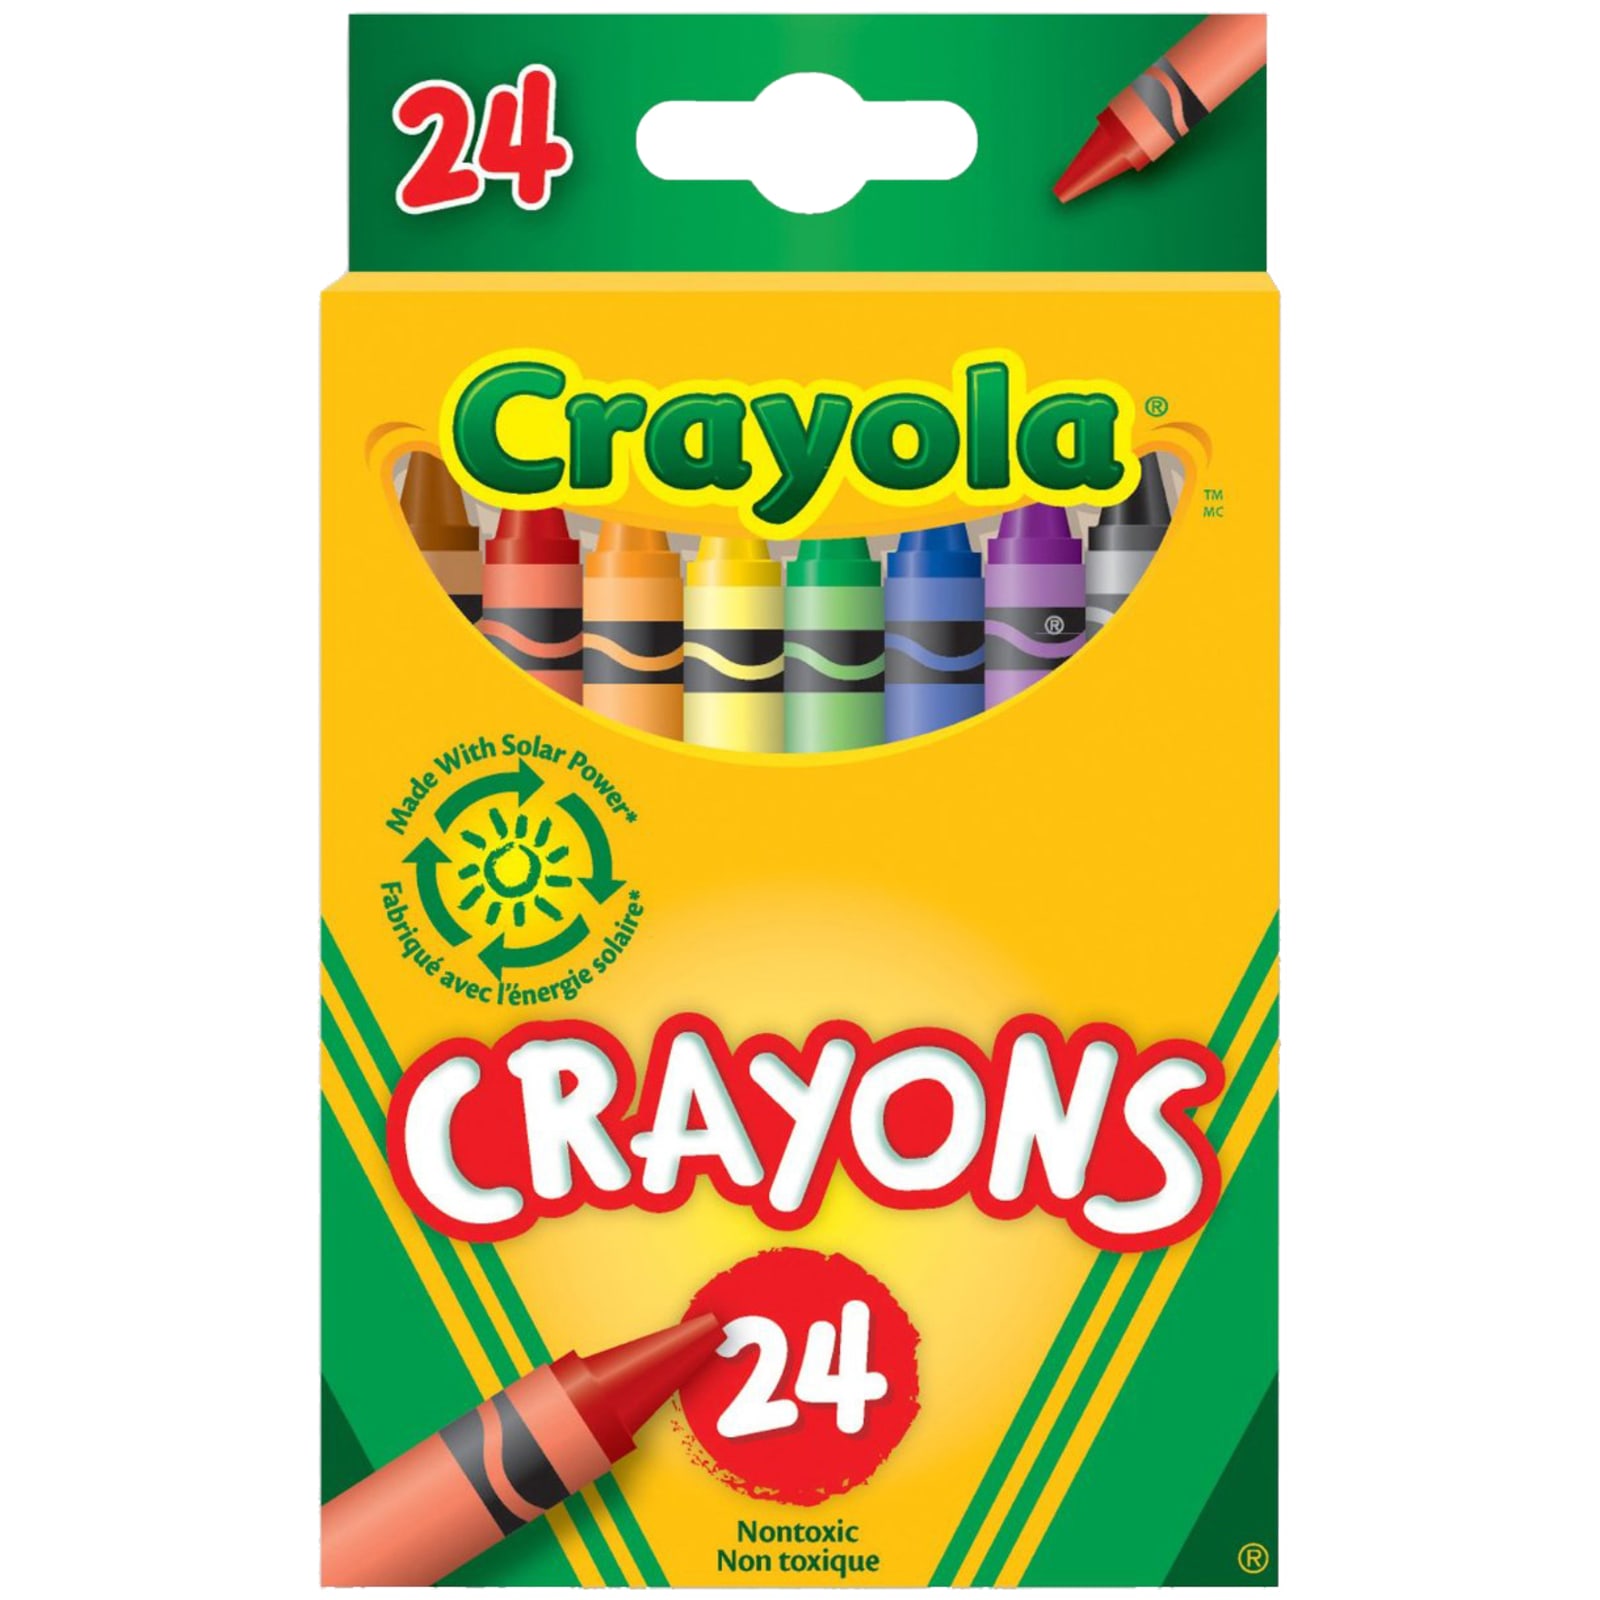 Crayola Touch Lights, Musical Doodle Board, Crayola.com